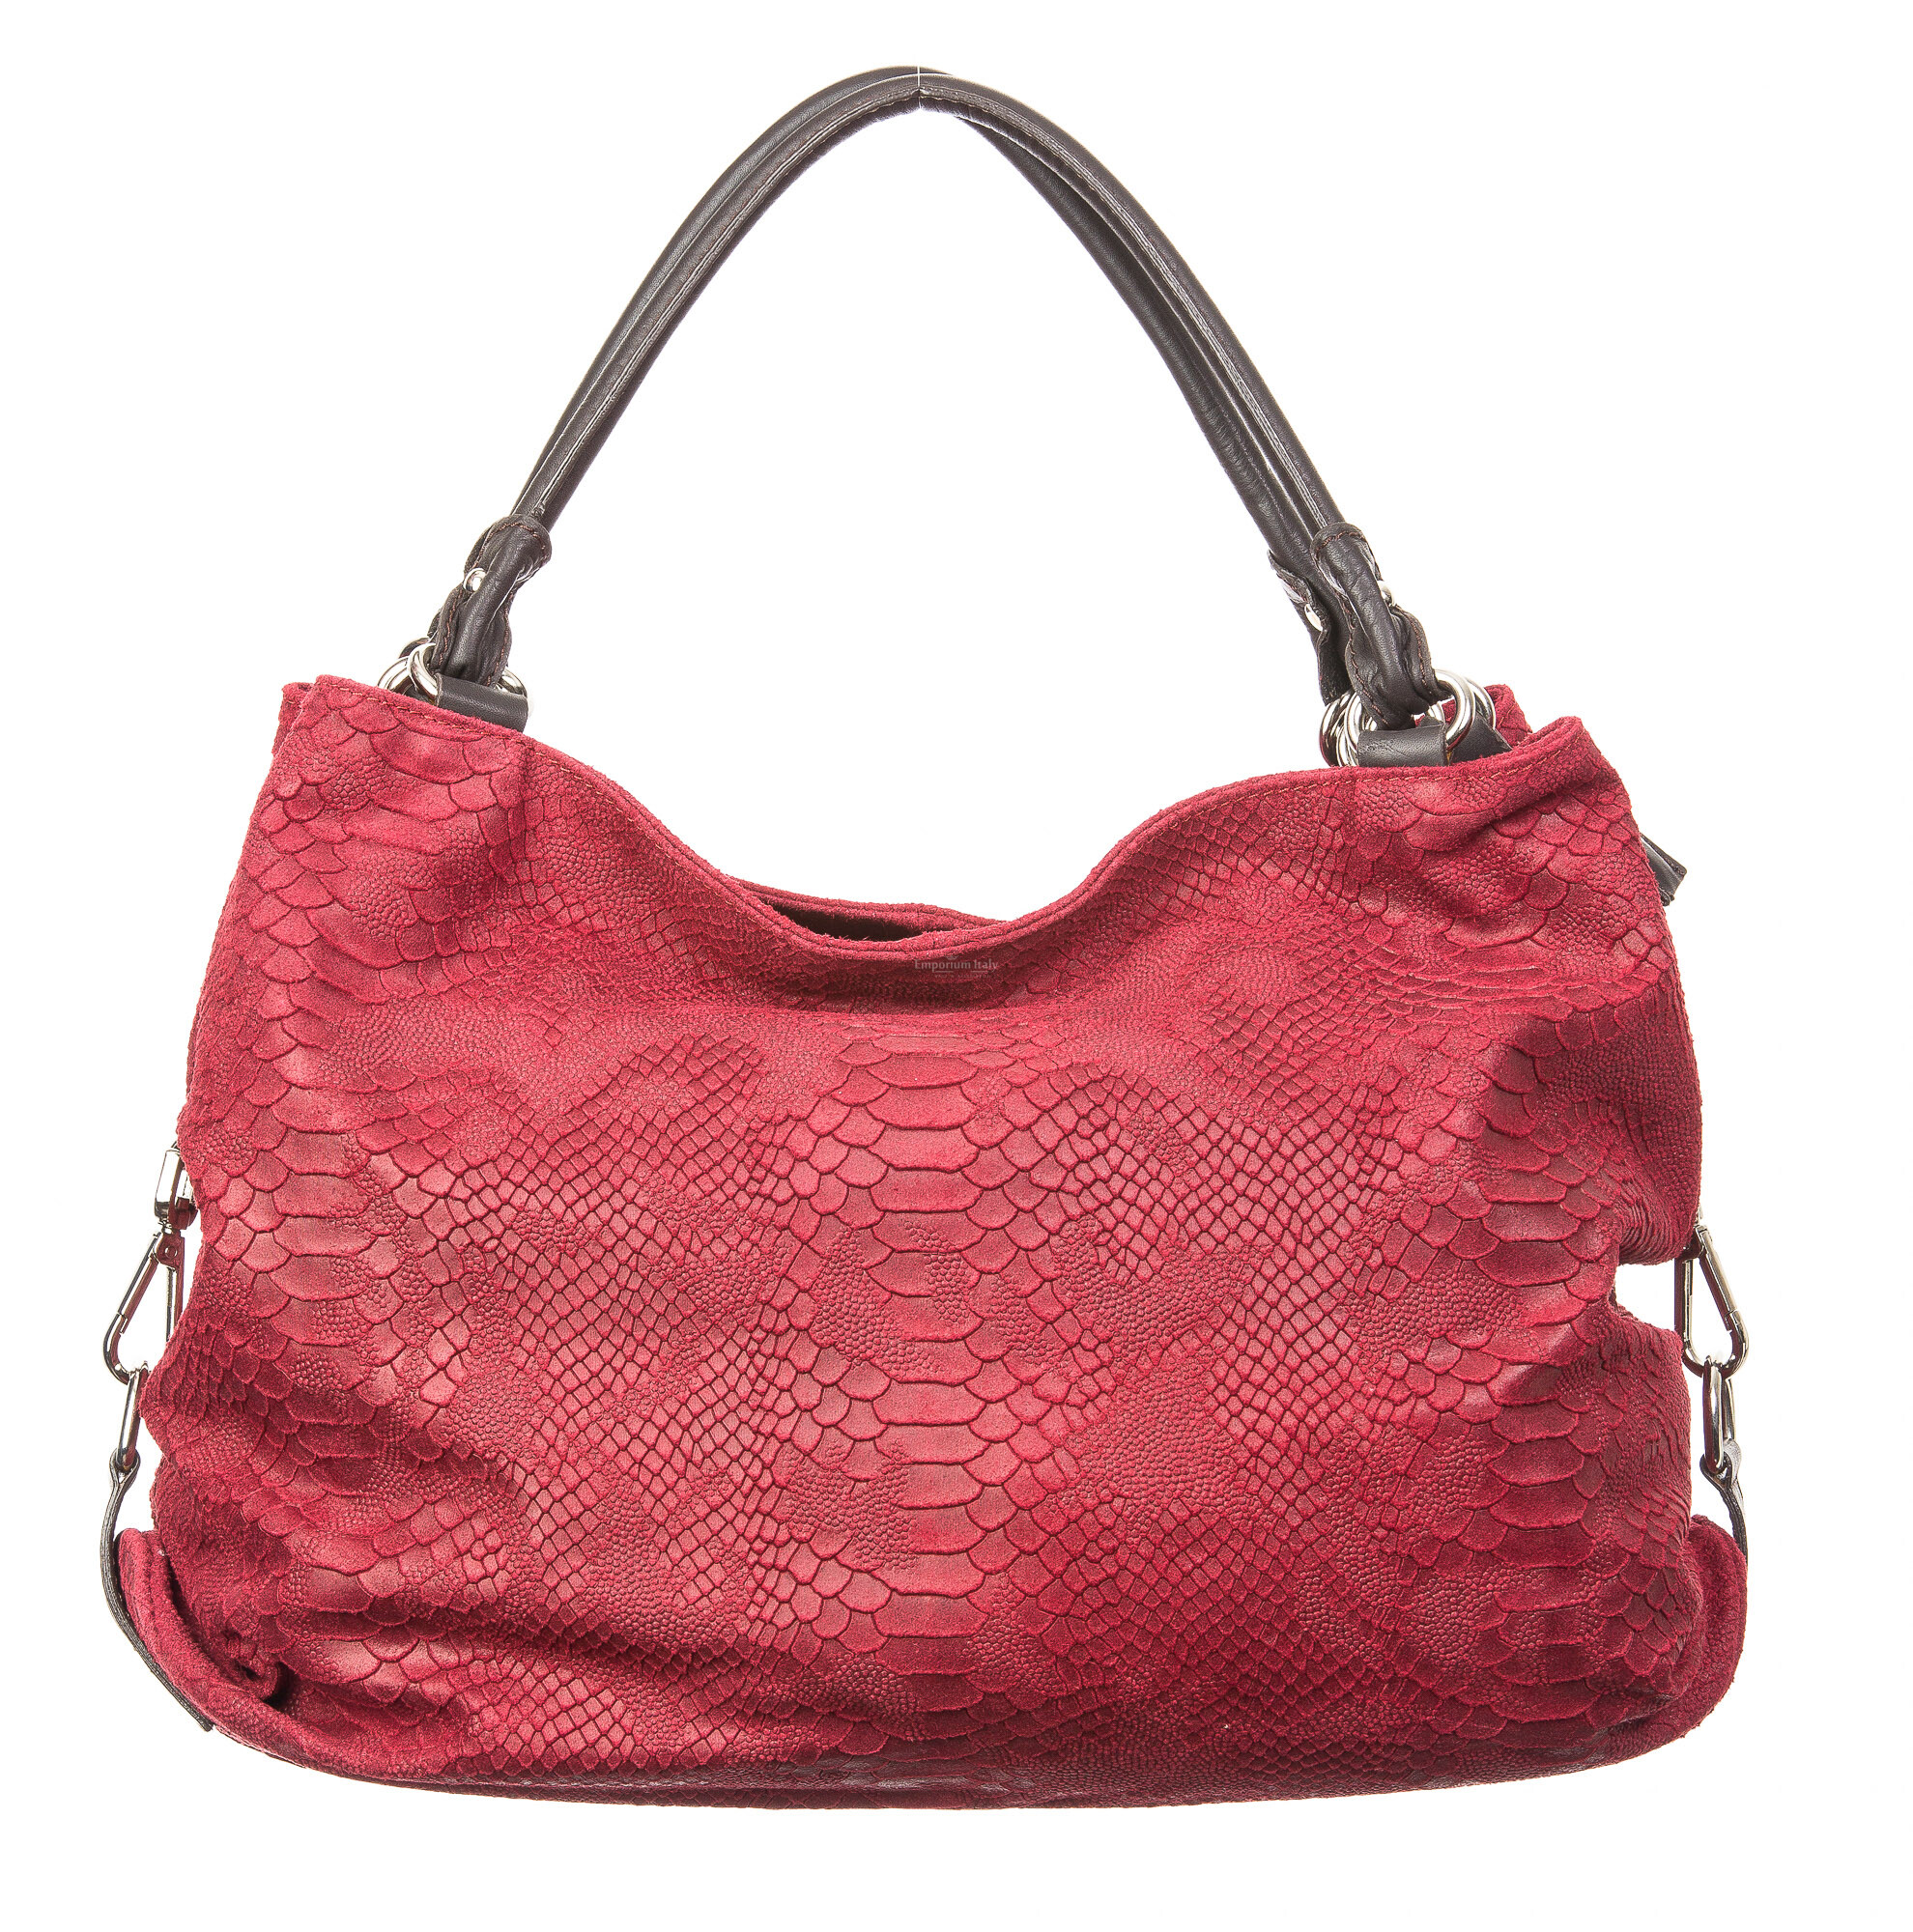 Ladies genuine leather bag CHIARO SCURO mod. DIVA, BORDO, Made in Italy ...